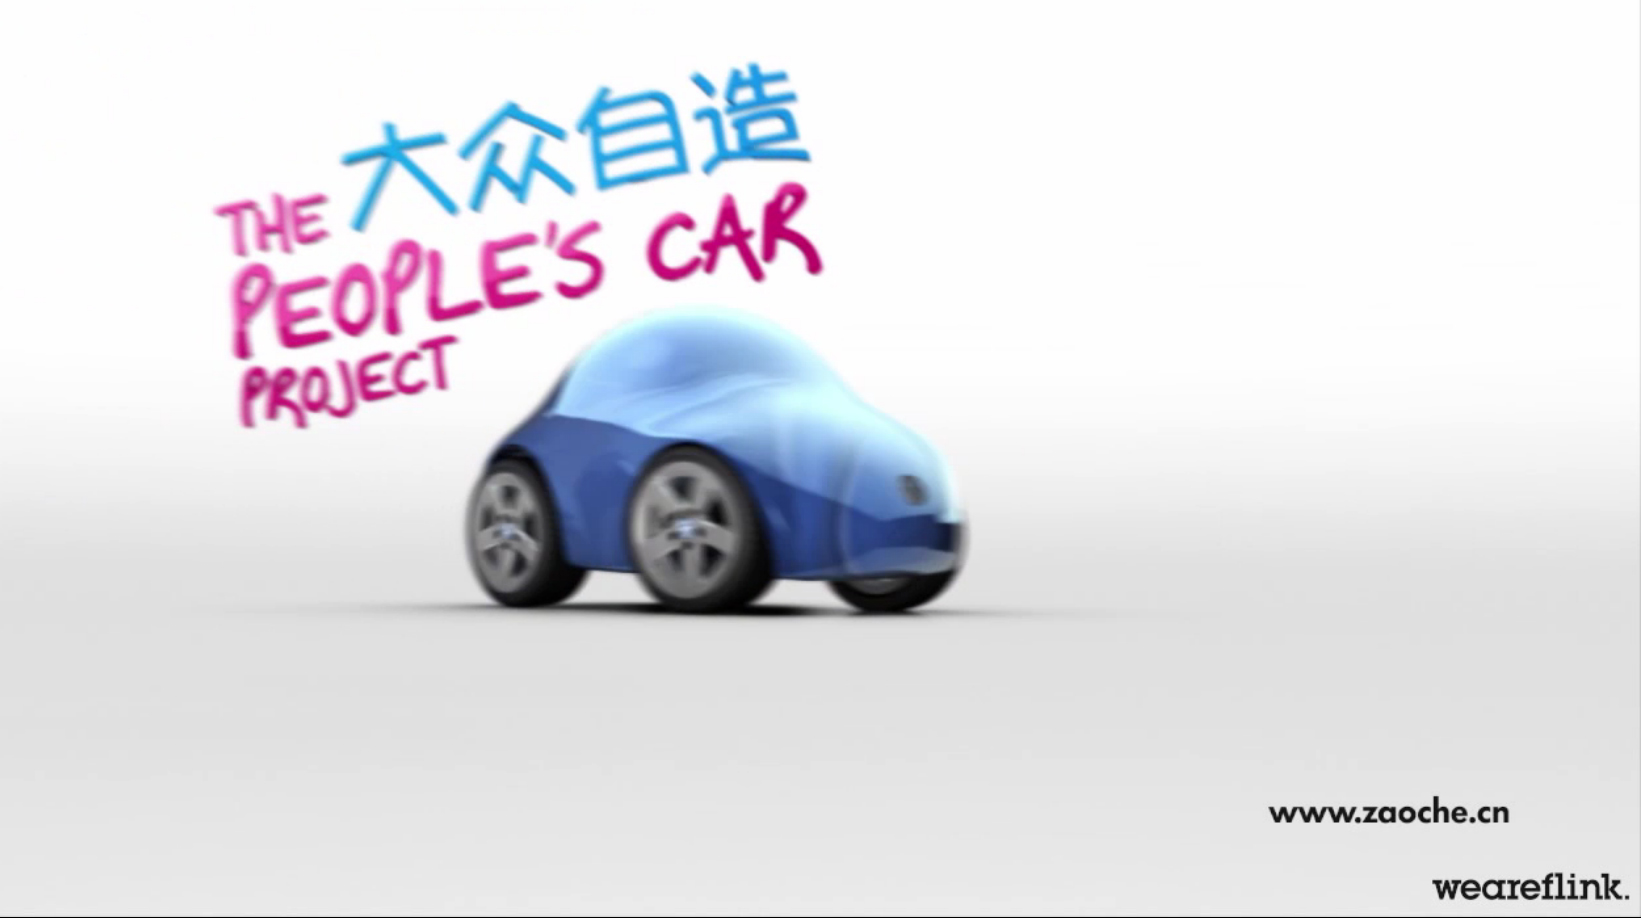 Amazing Volkswagen animation